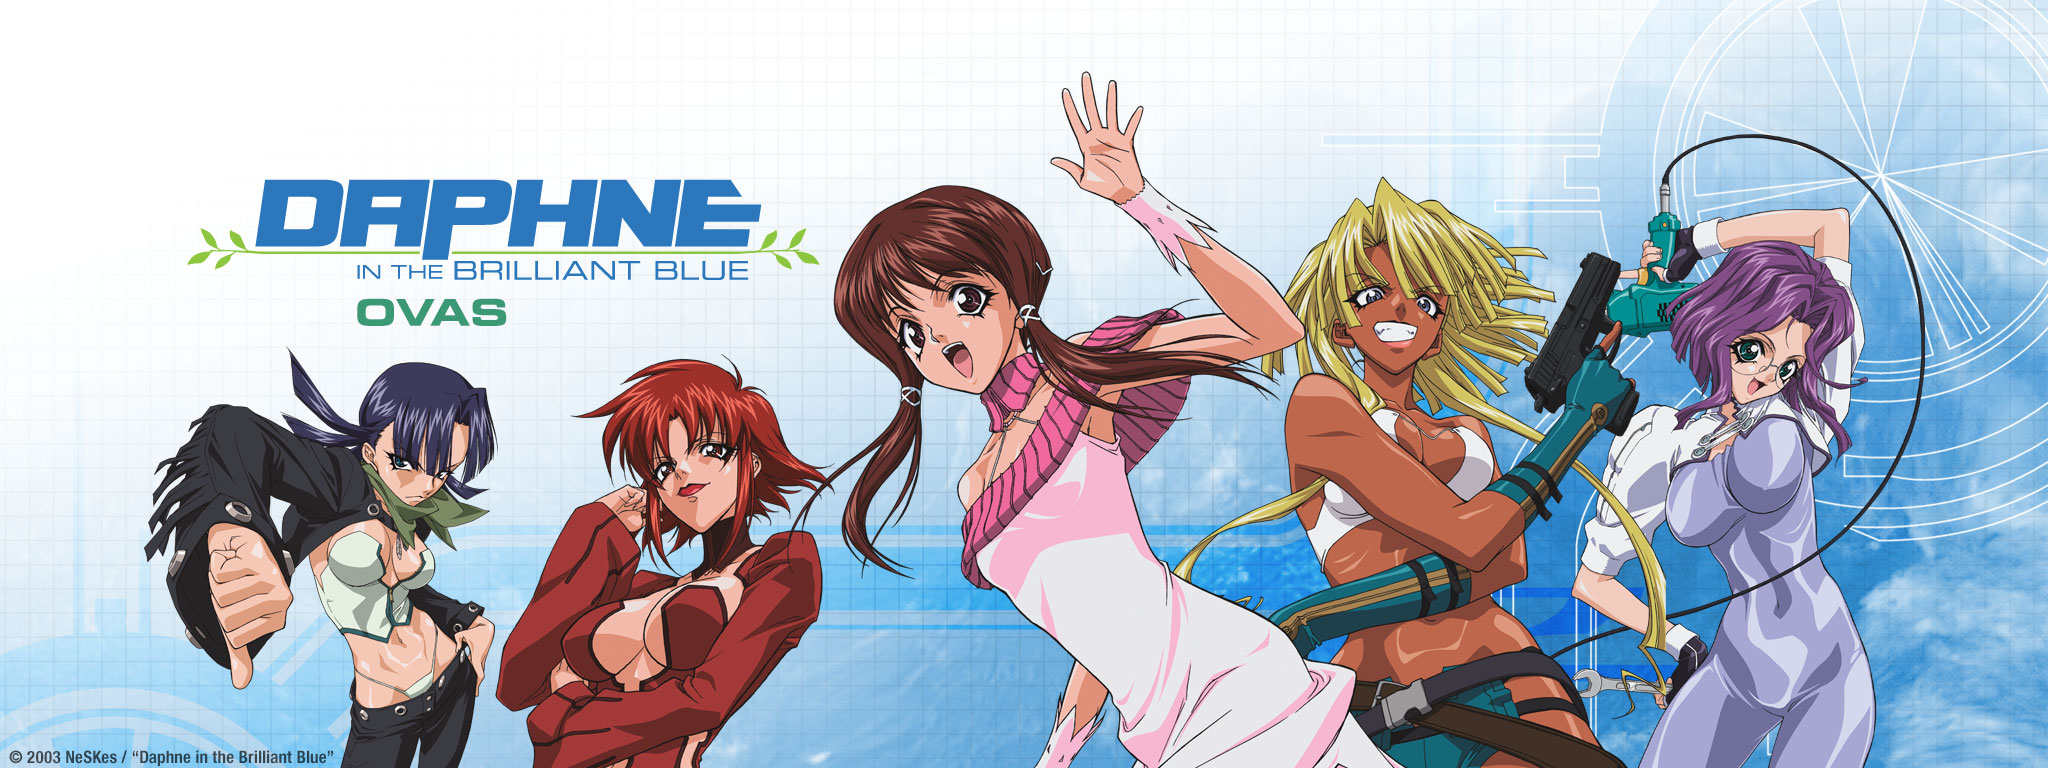 Title Art for Daphne in the Brilliant Blue - OVA